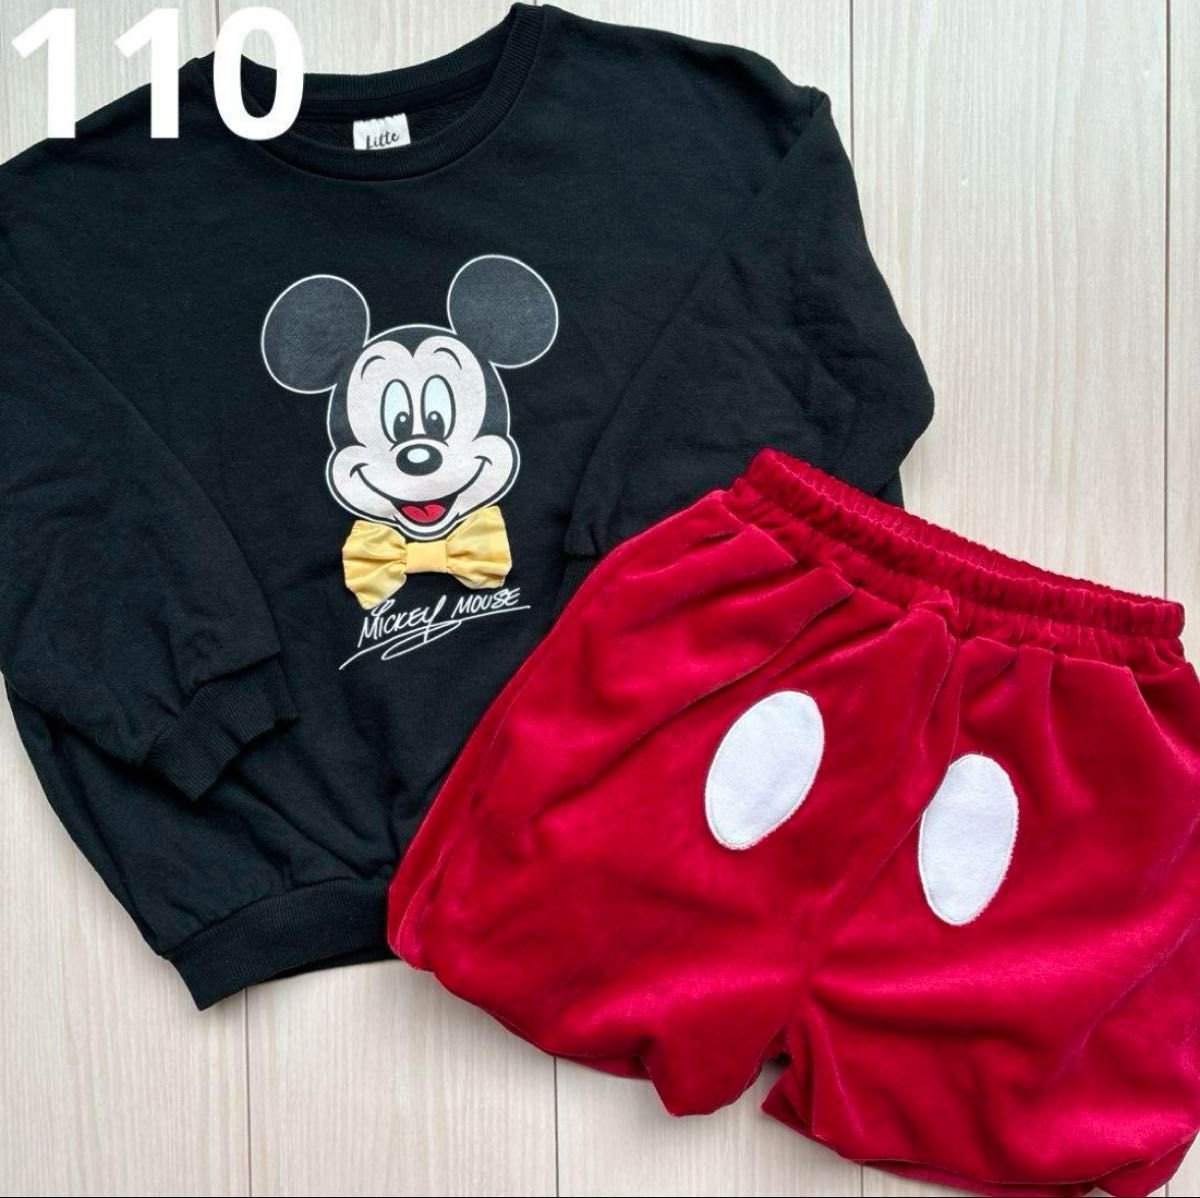 【Disney】ディズニー ミッキー なりきり トレーナー☆パンツ リトシー セット 110